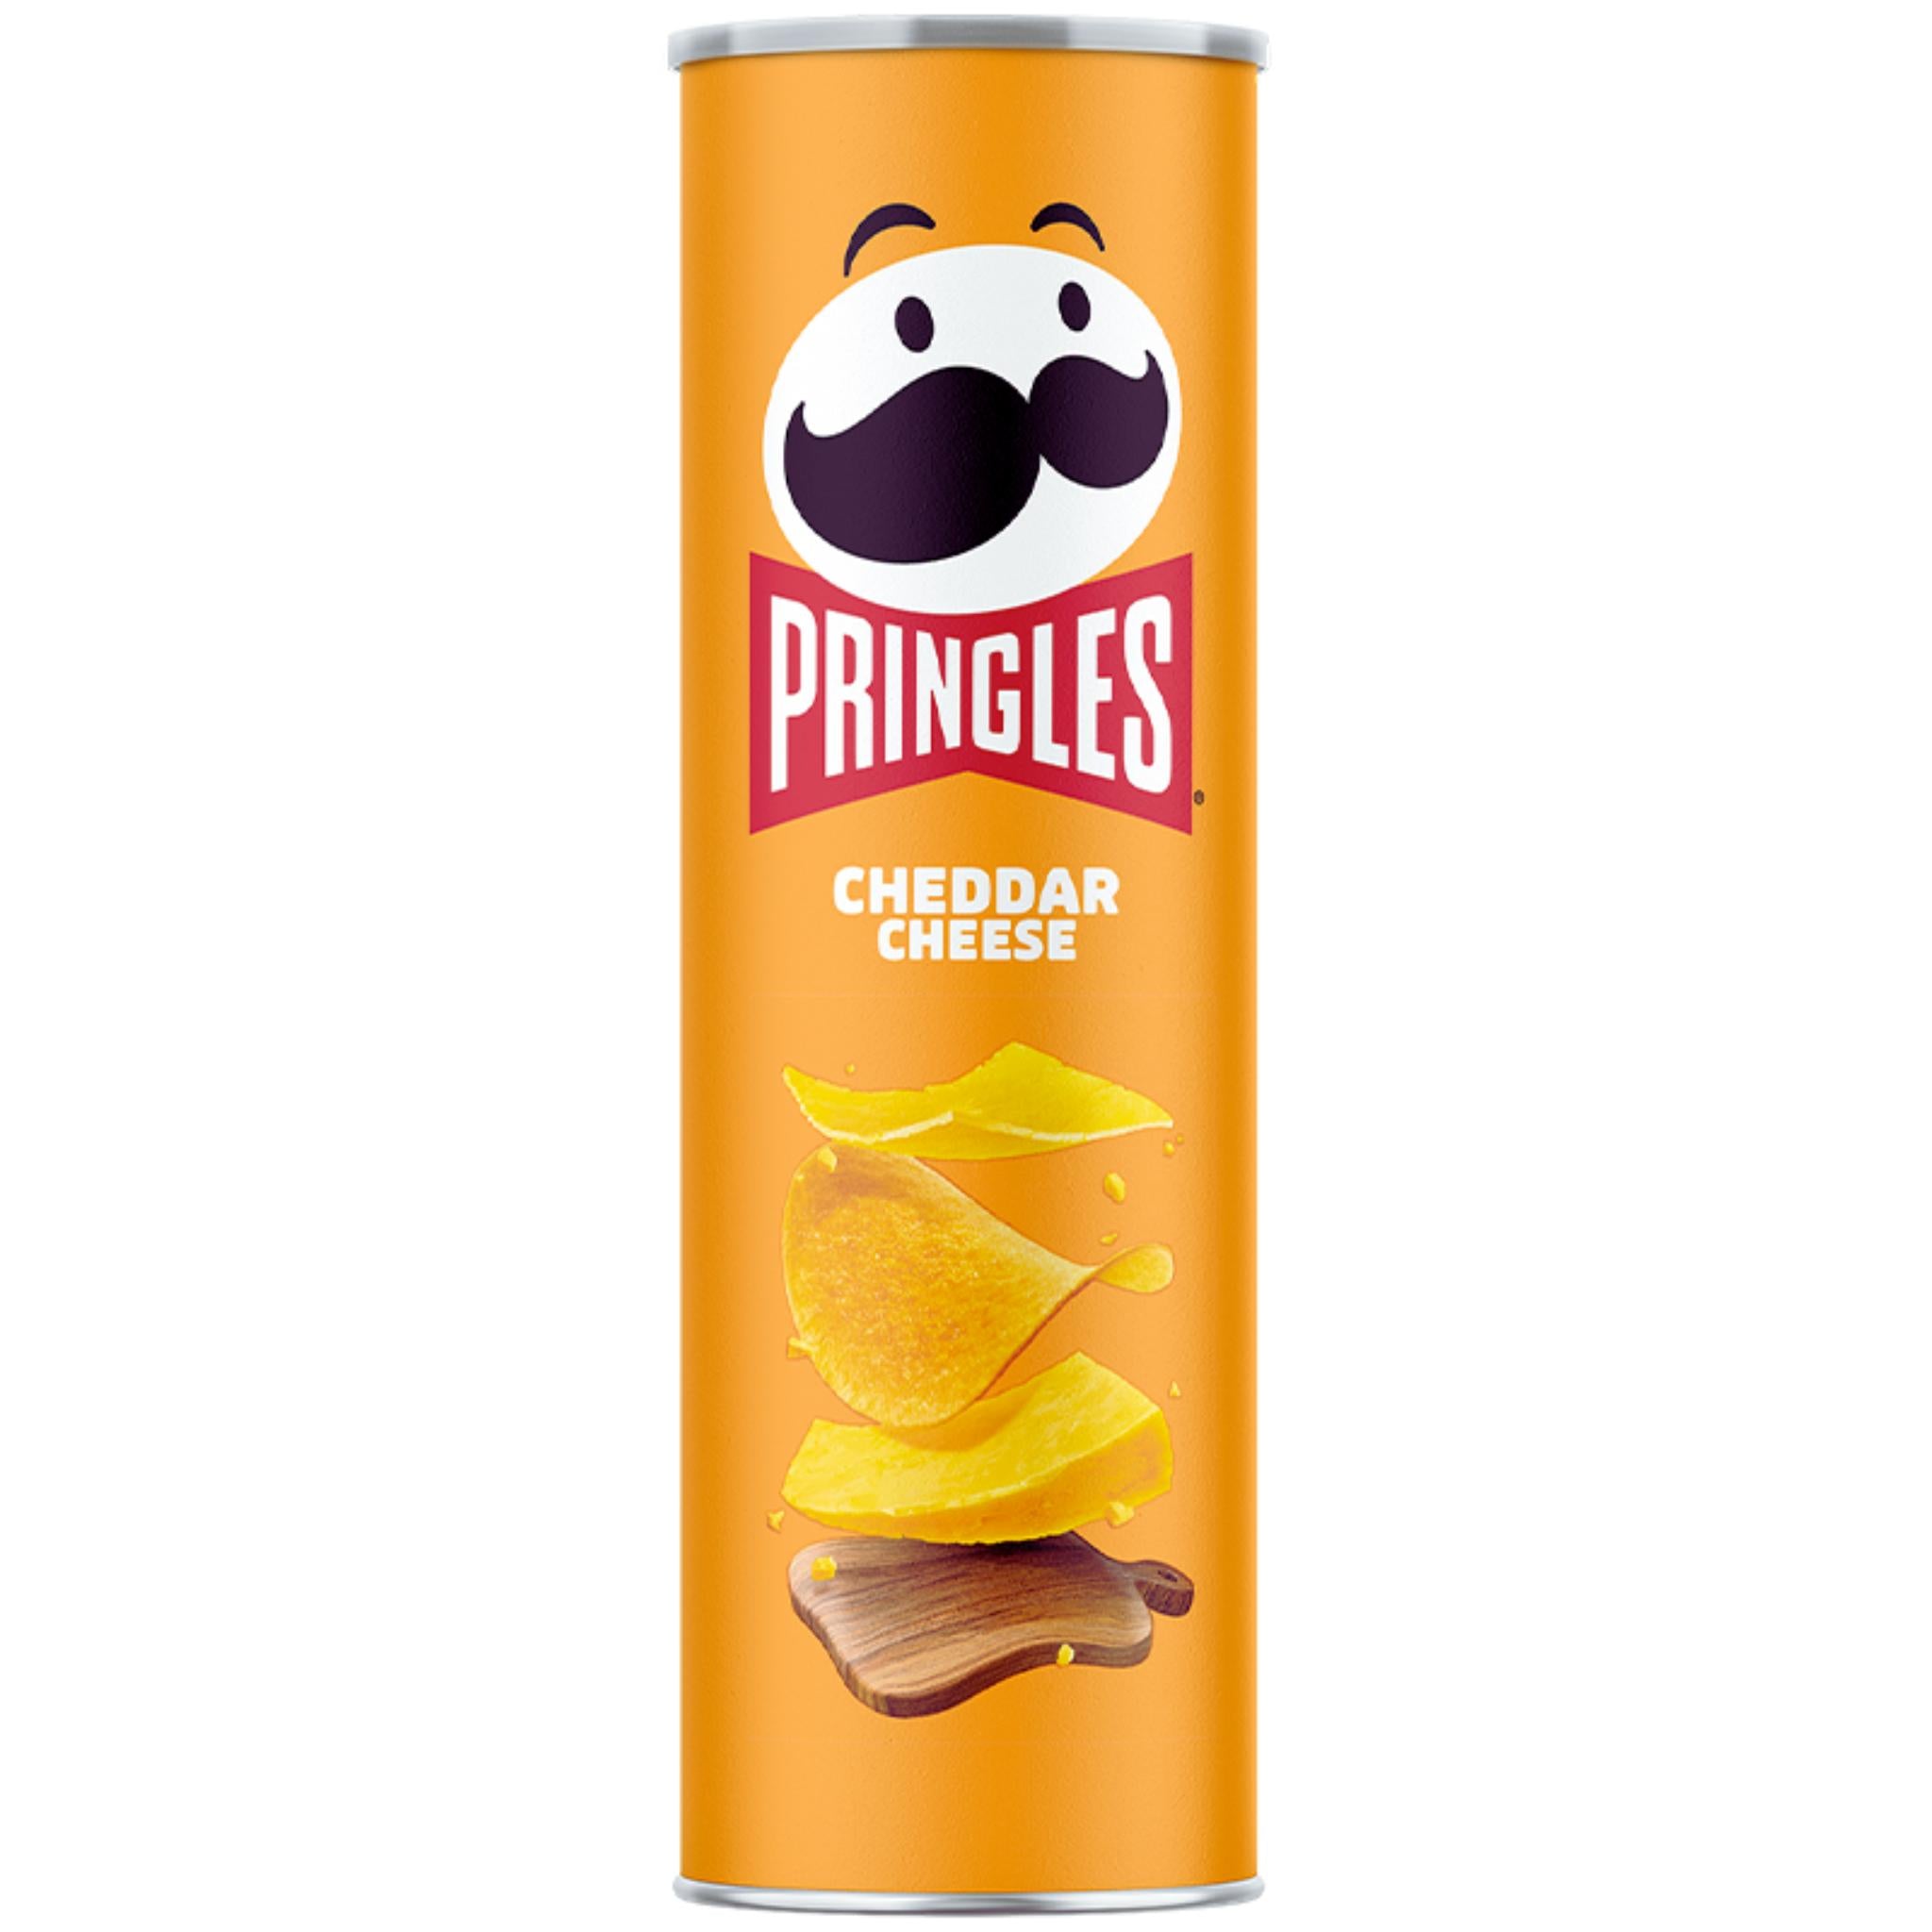 Pringles Cheddar Cheese - 158g (USA)